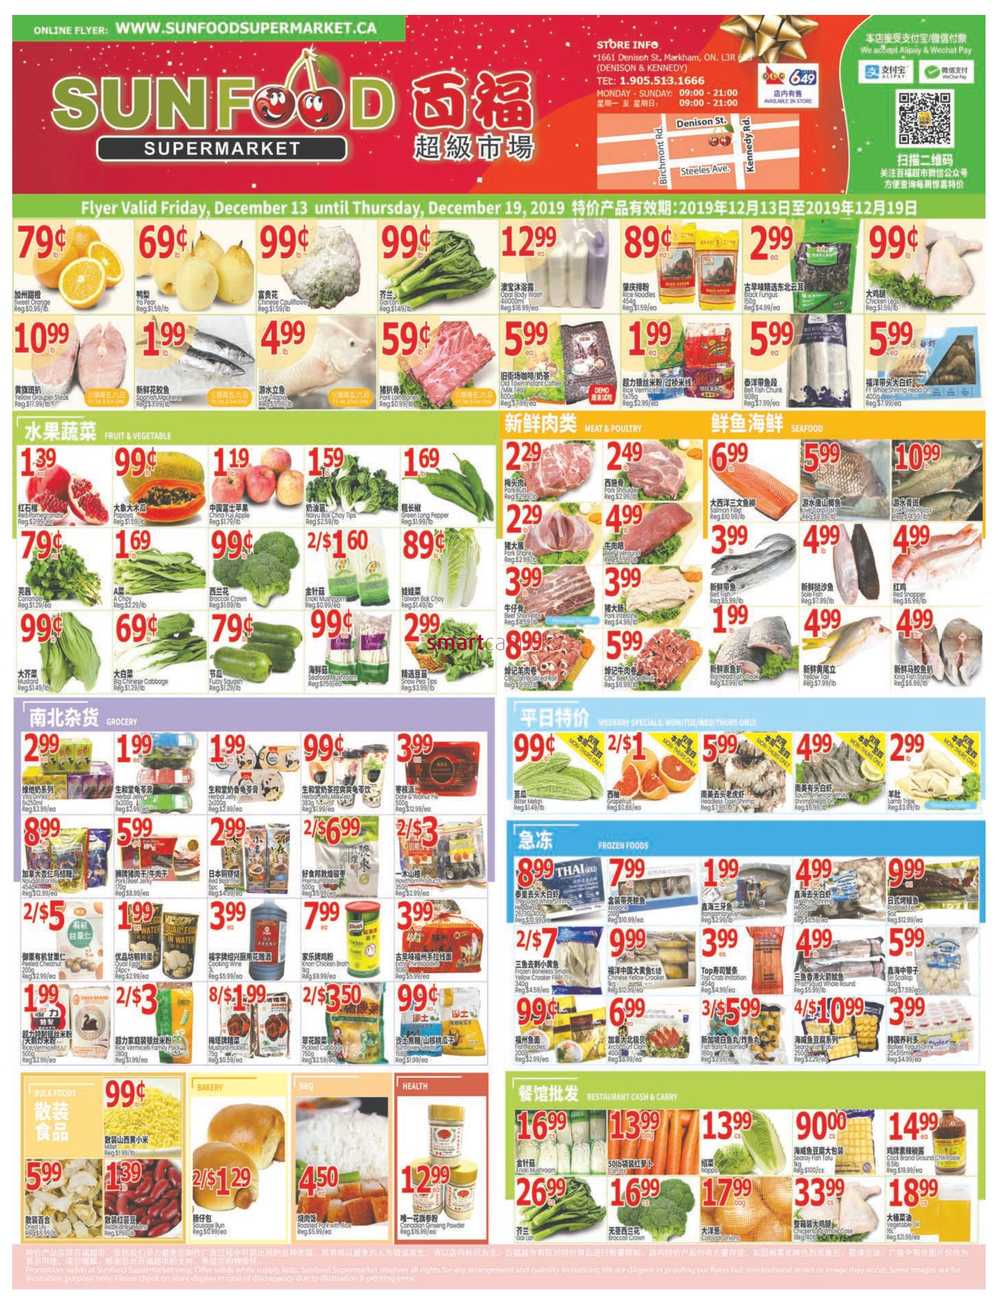 Sunfood Supermarket Flyer December 13 to 19